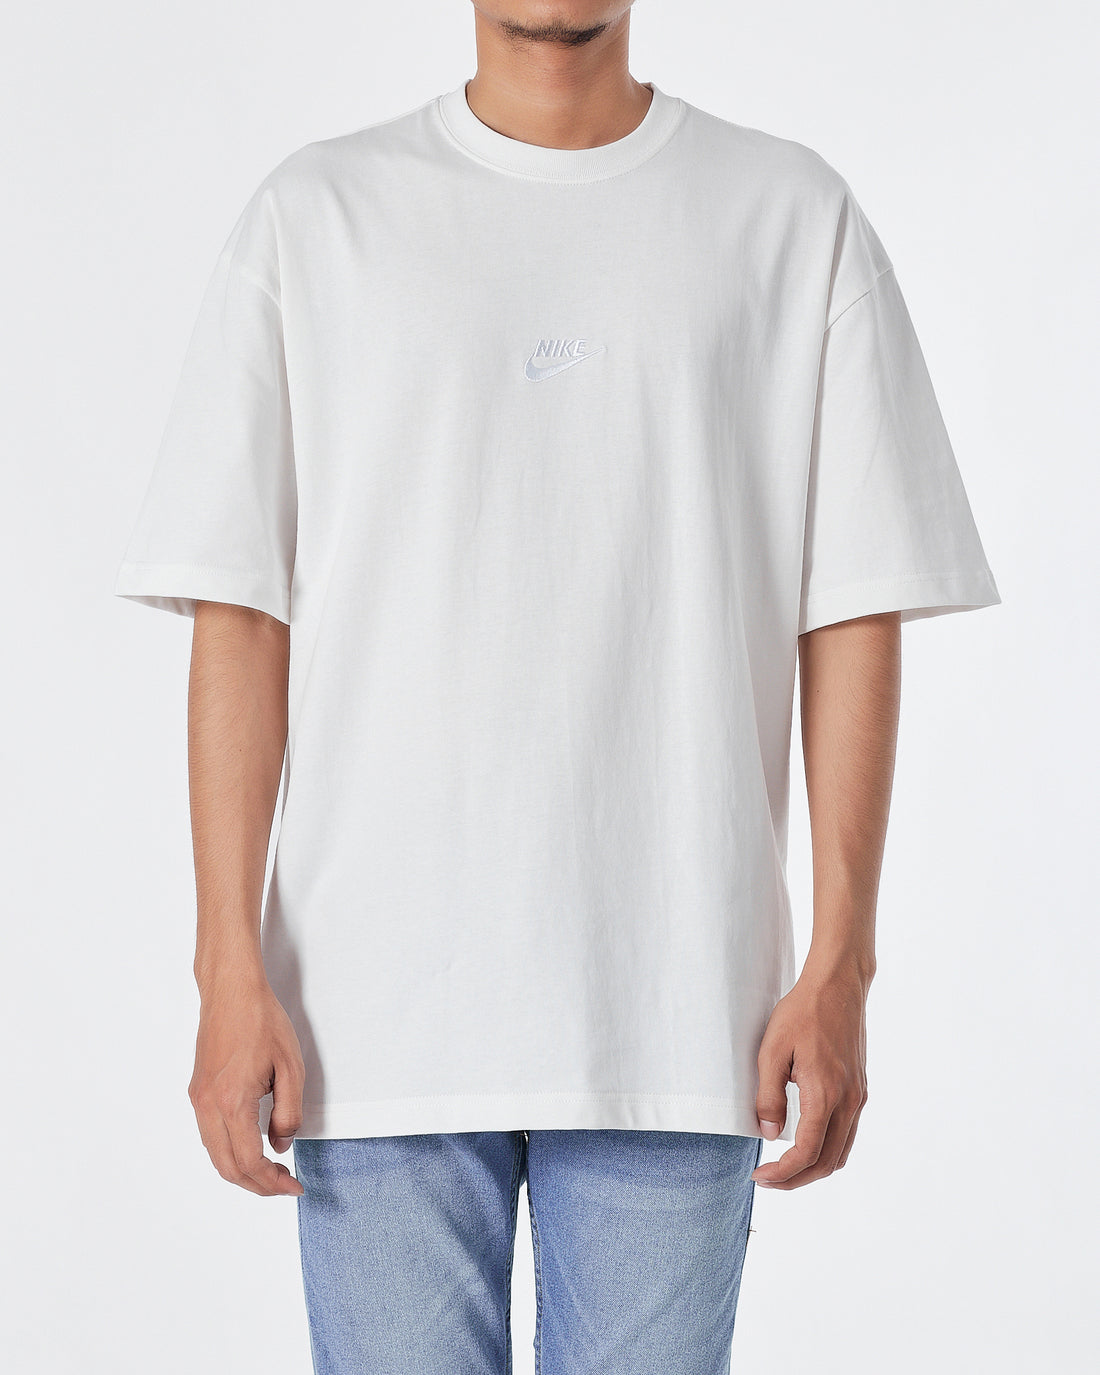 NIK Logo Embroidered Men White T-Shirt 16.90